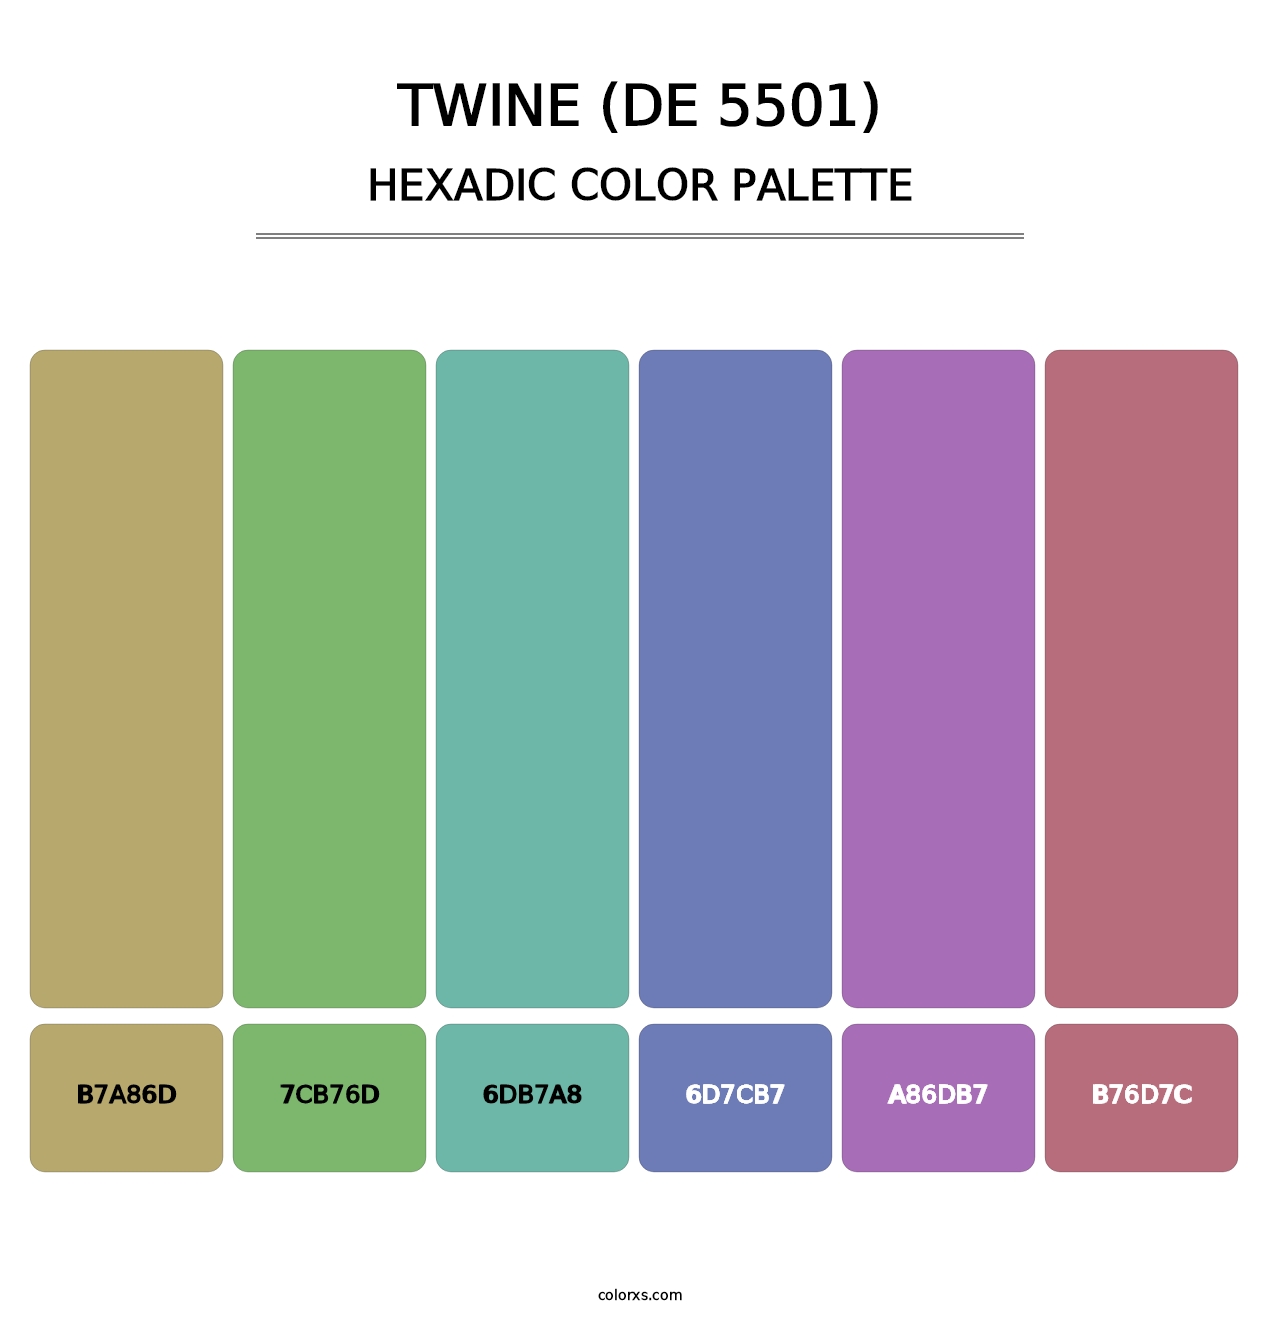 Twine (DE 5501) - Hexadic Color Palette